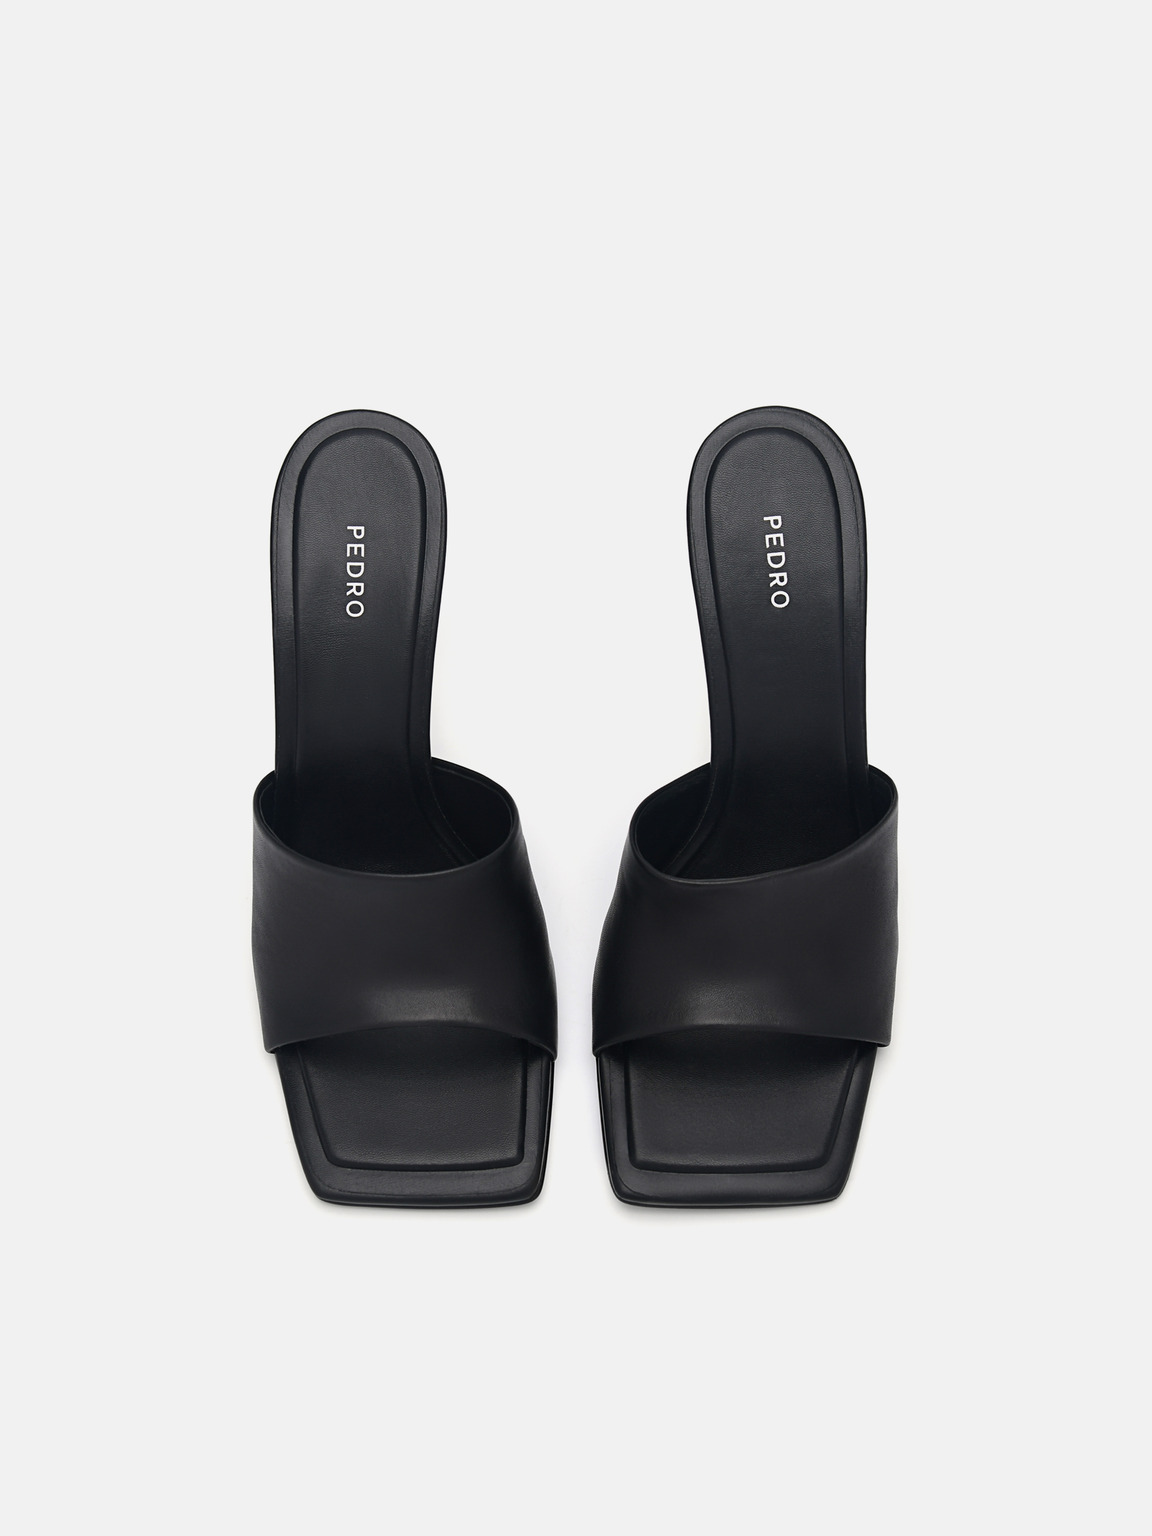 Maria Leather Heel Sandals, Black